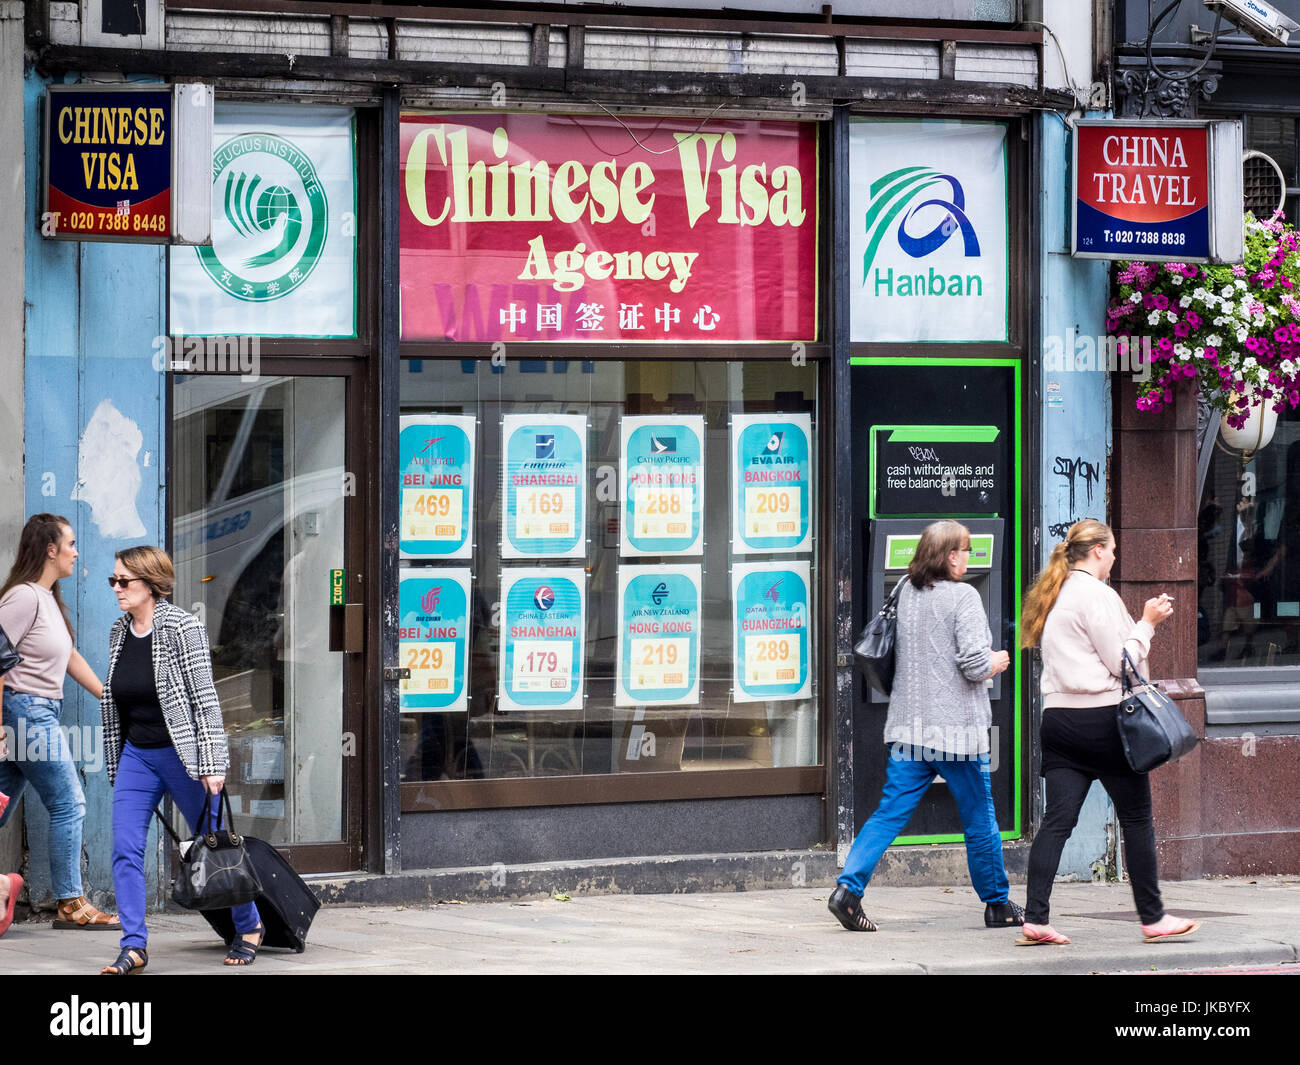 Chinese Visa Agency Store in Euston Road, London UK Stock Photo - Alamy